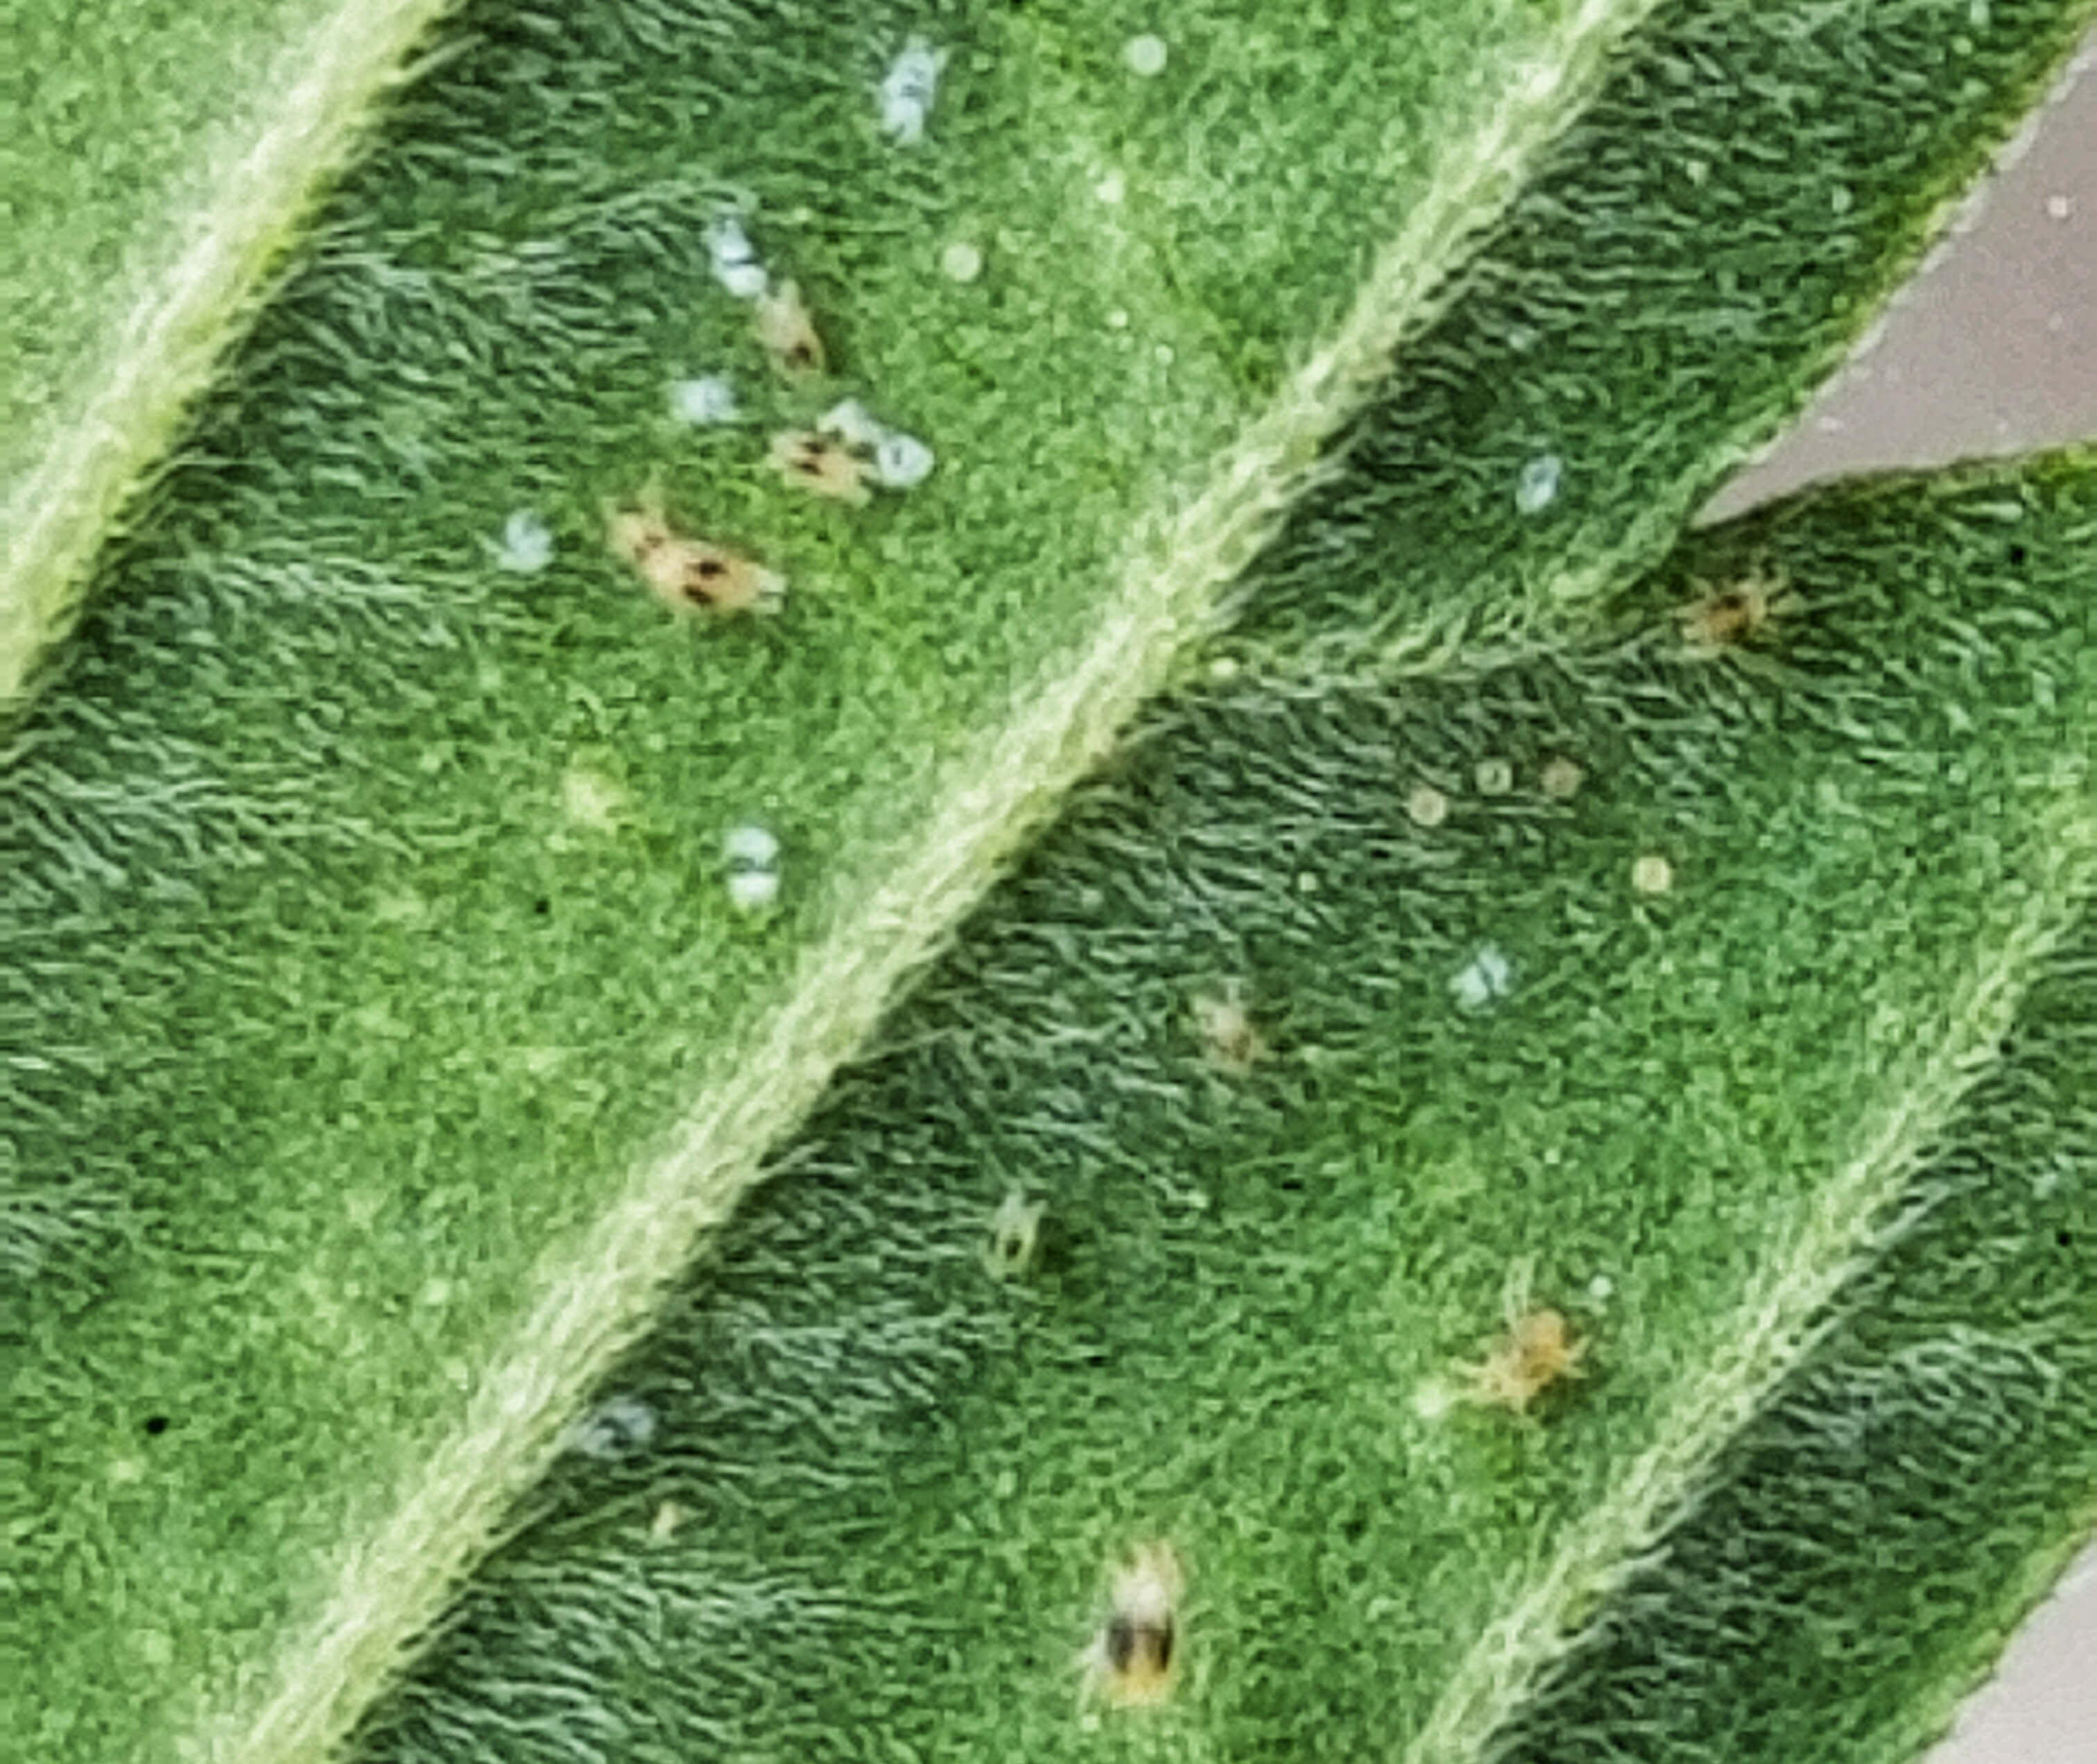 Spider Mites on Cannabis Leaf